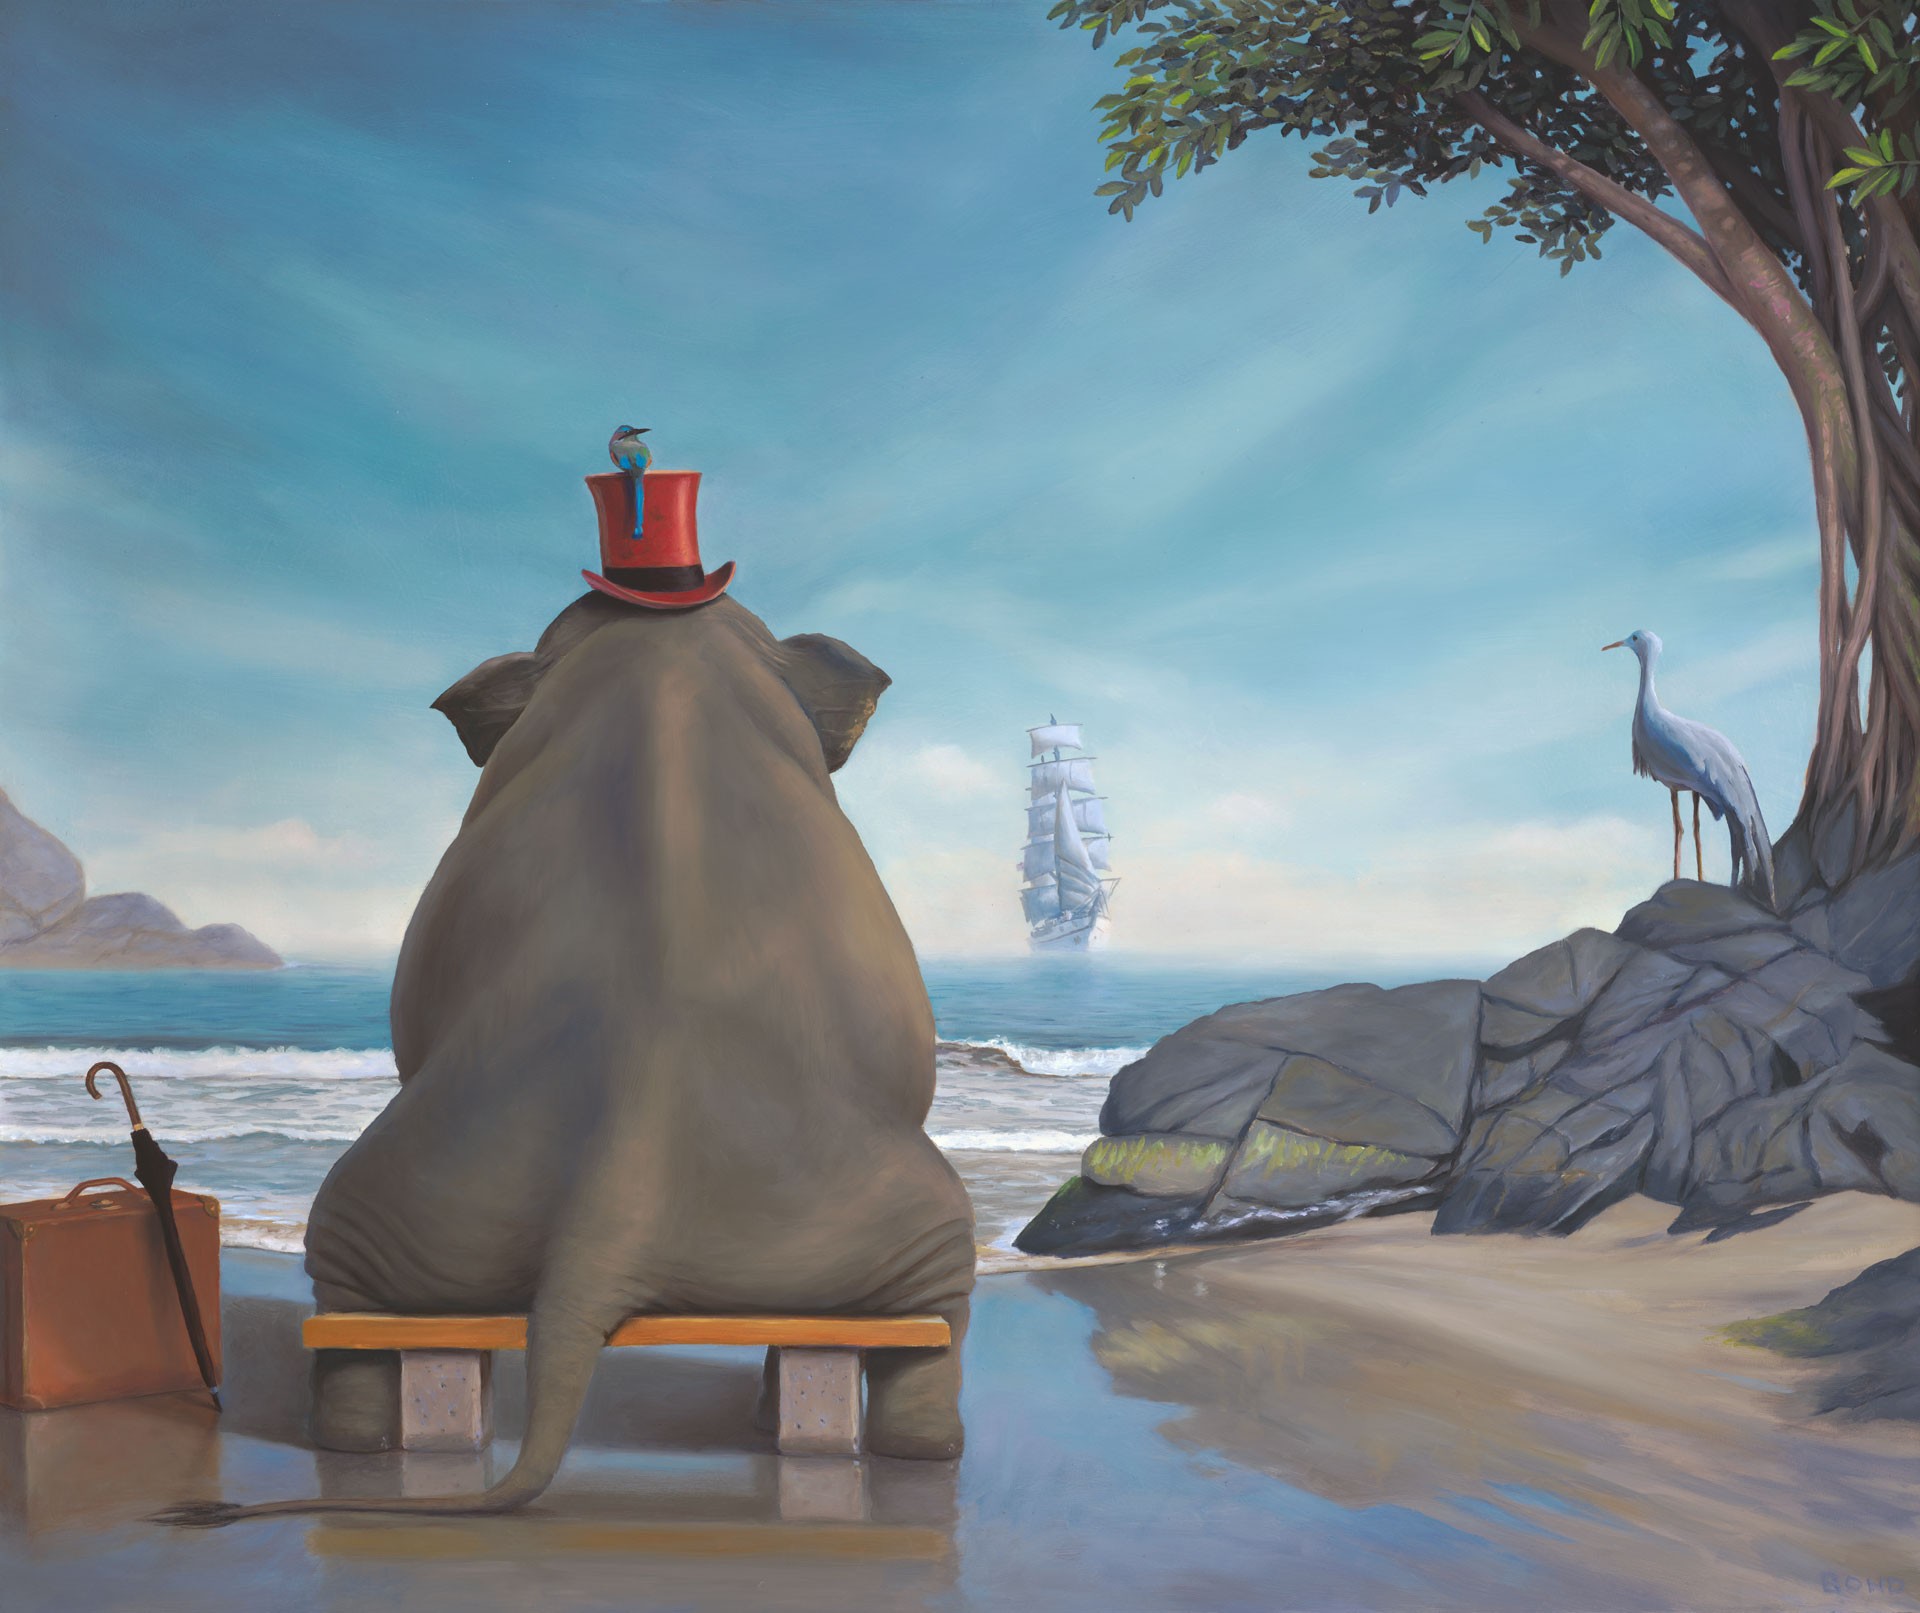 Nature Animals Digital Art Elephant Painting Artwork Surreal Sea Sailing Ship Top Hats Birds Sitting 1920x1613